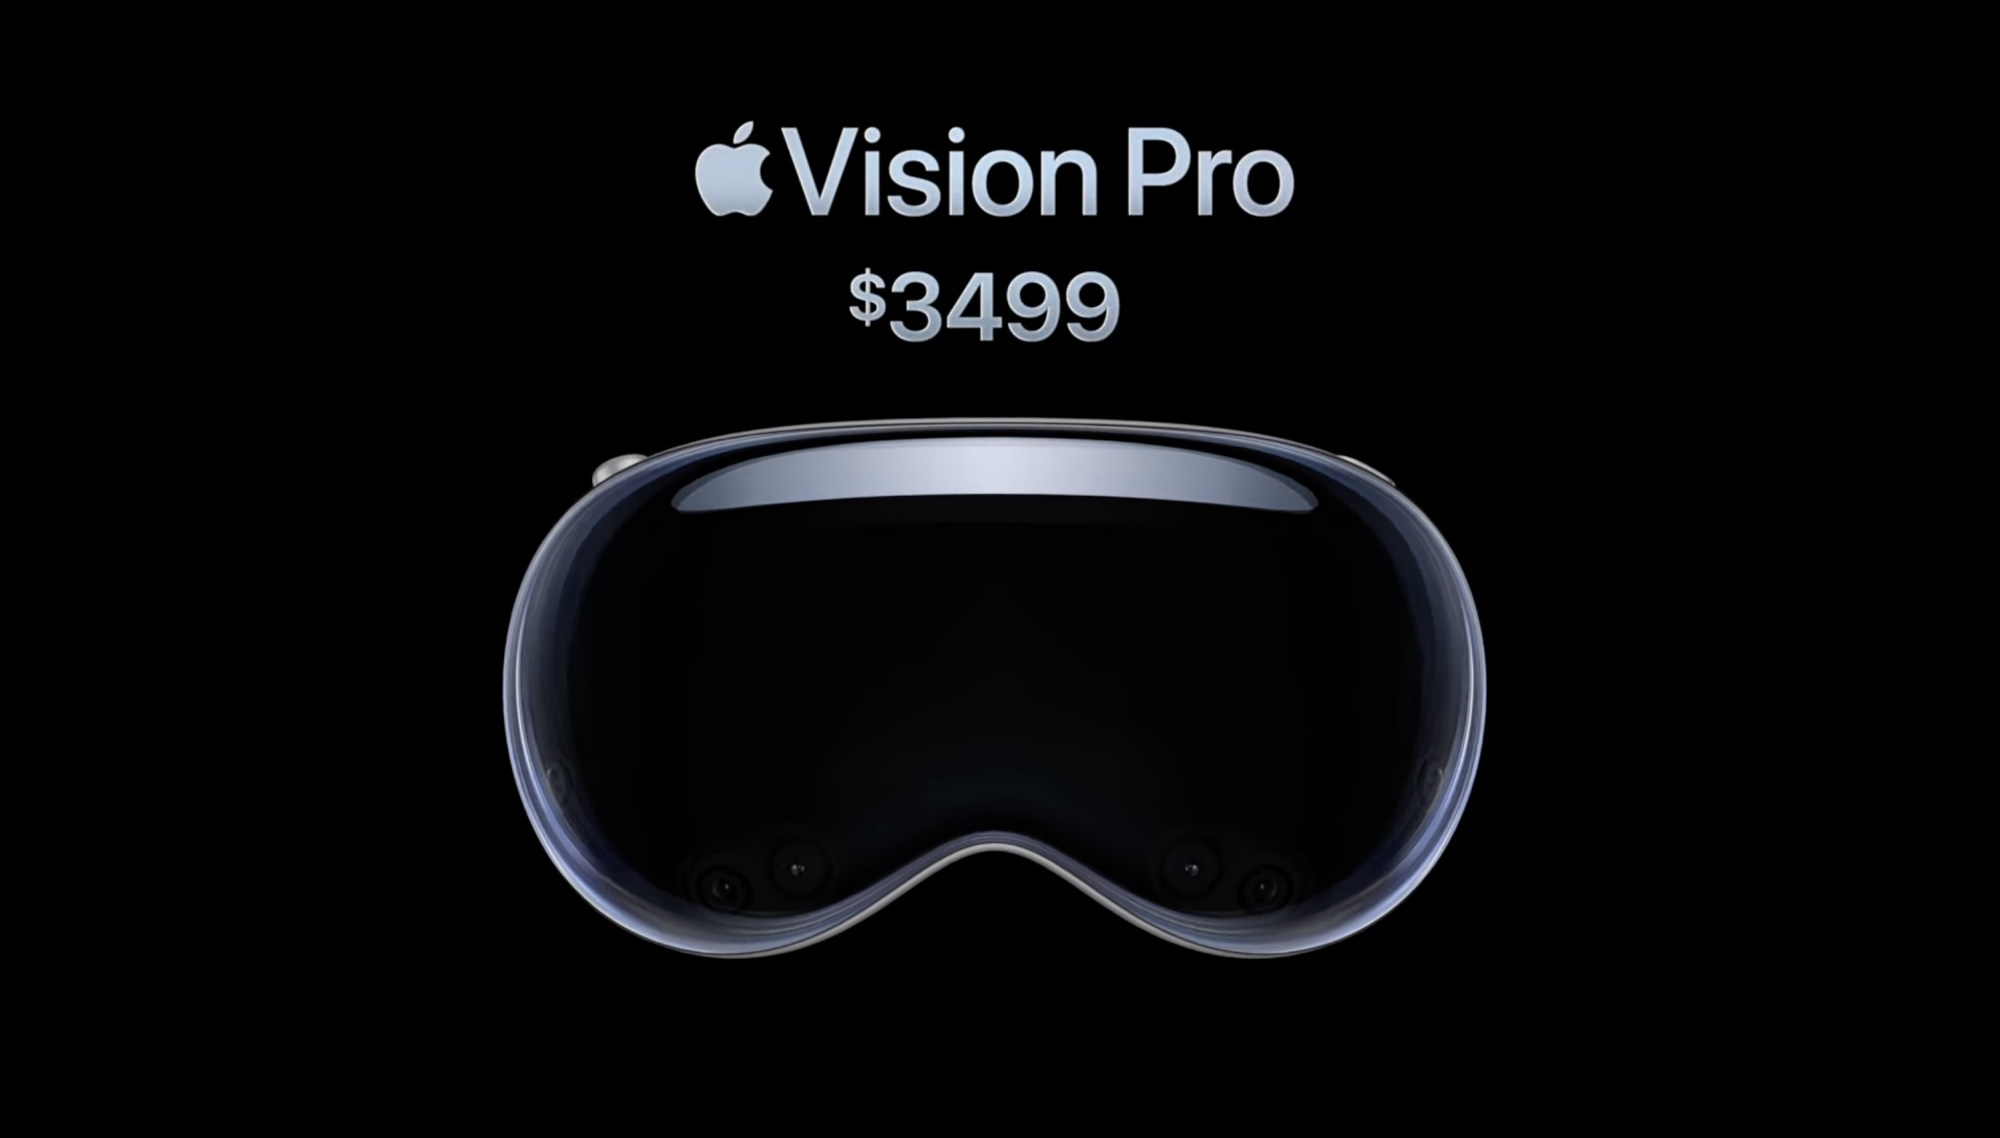 Vision Pro price